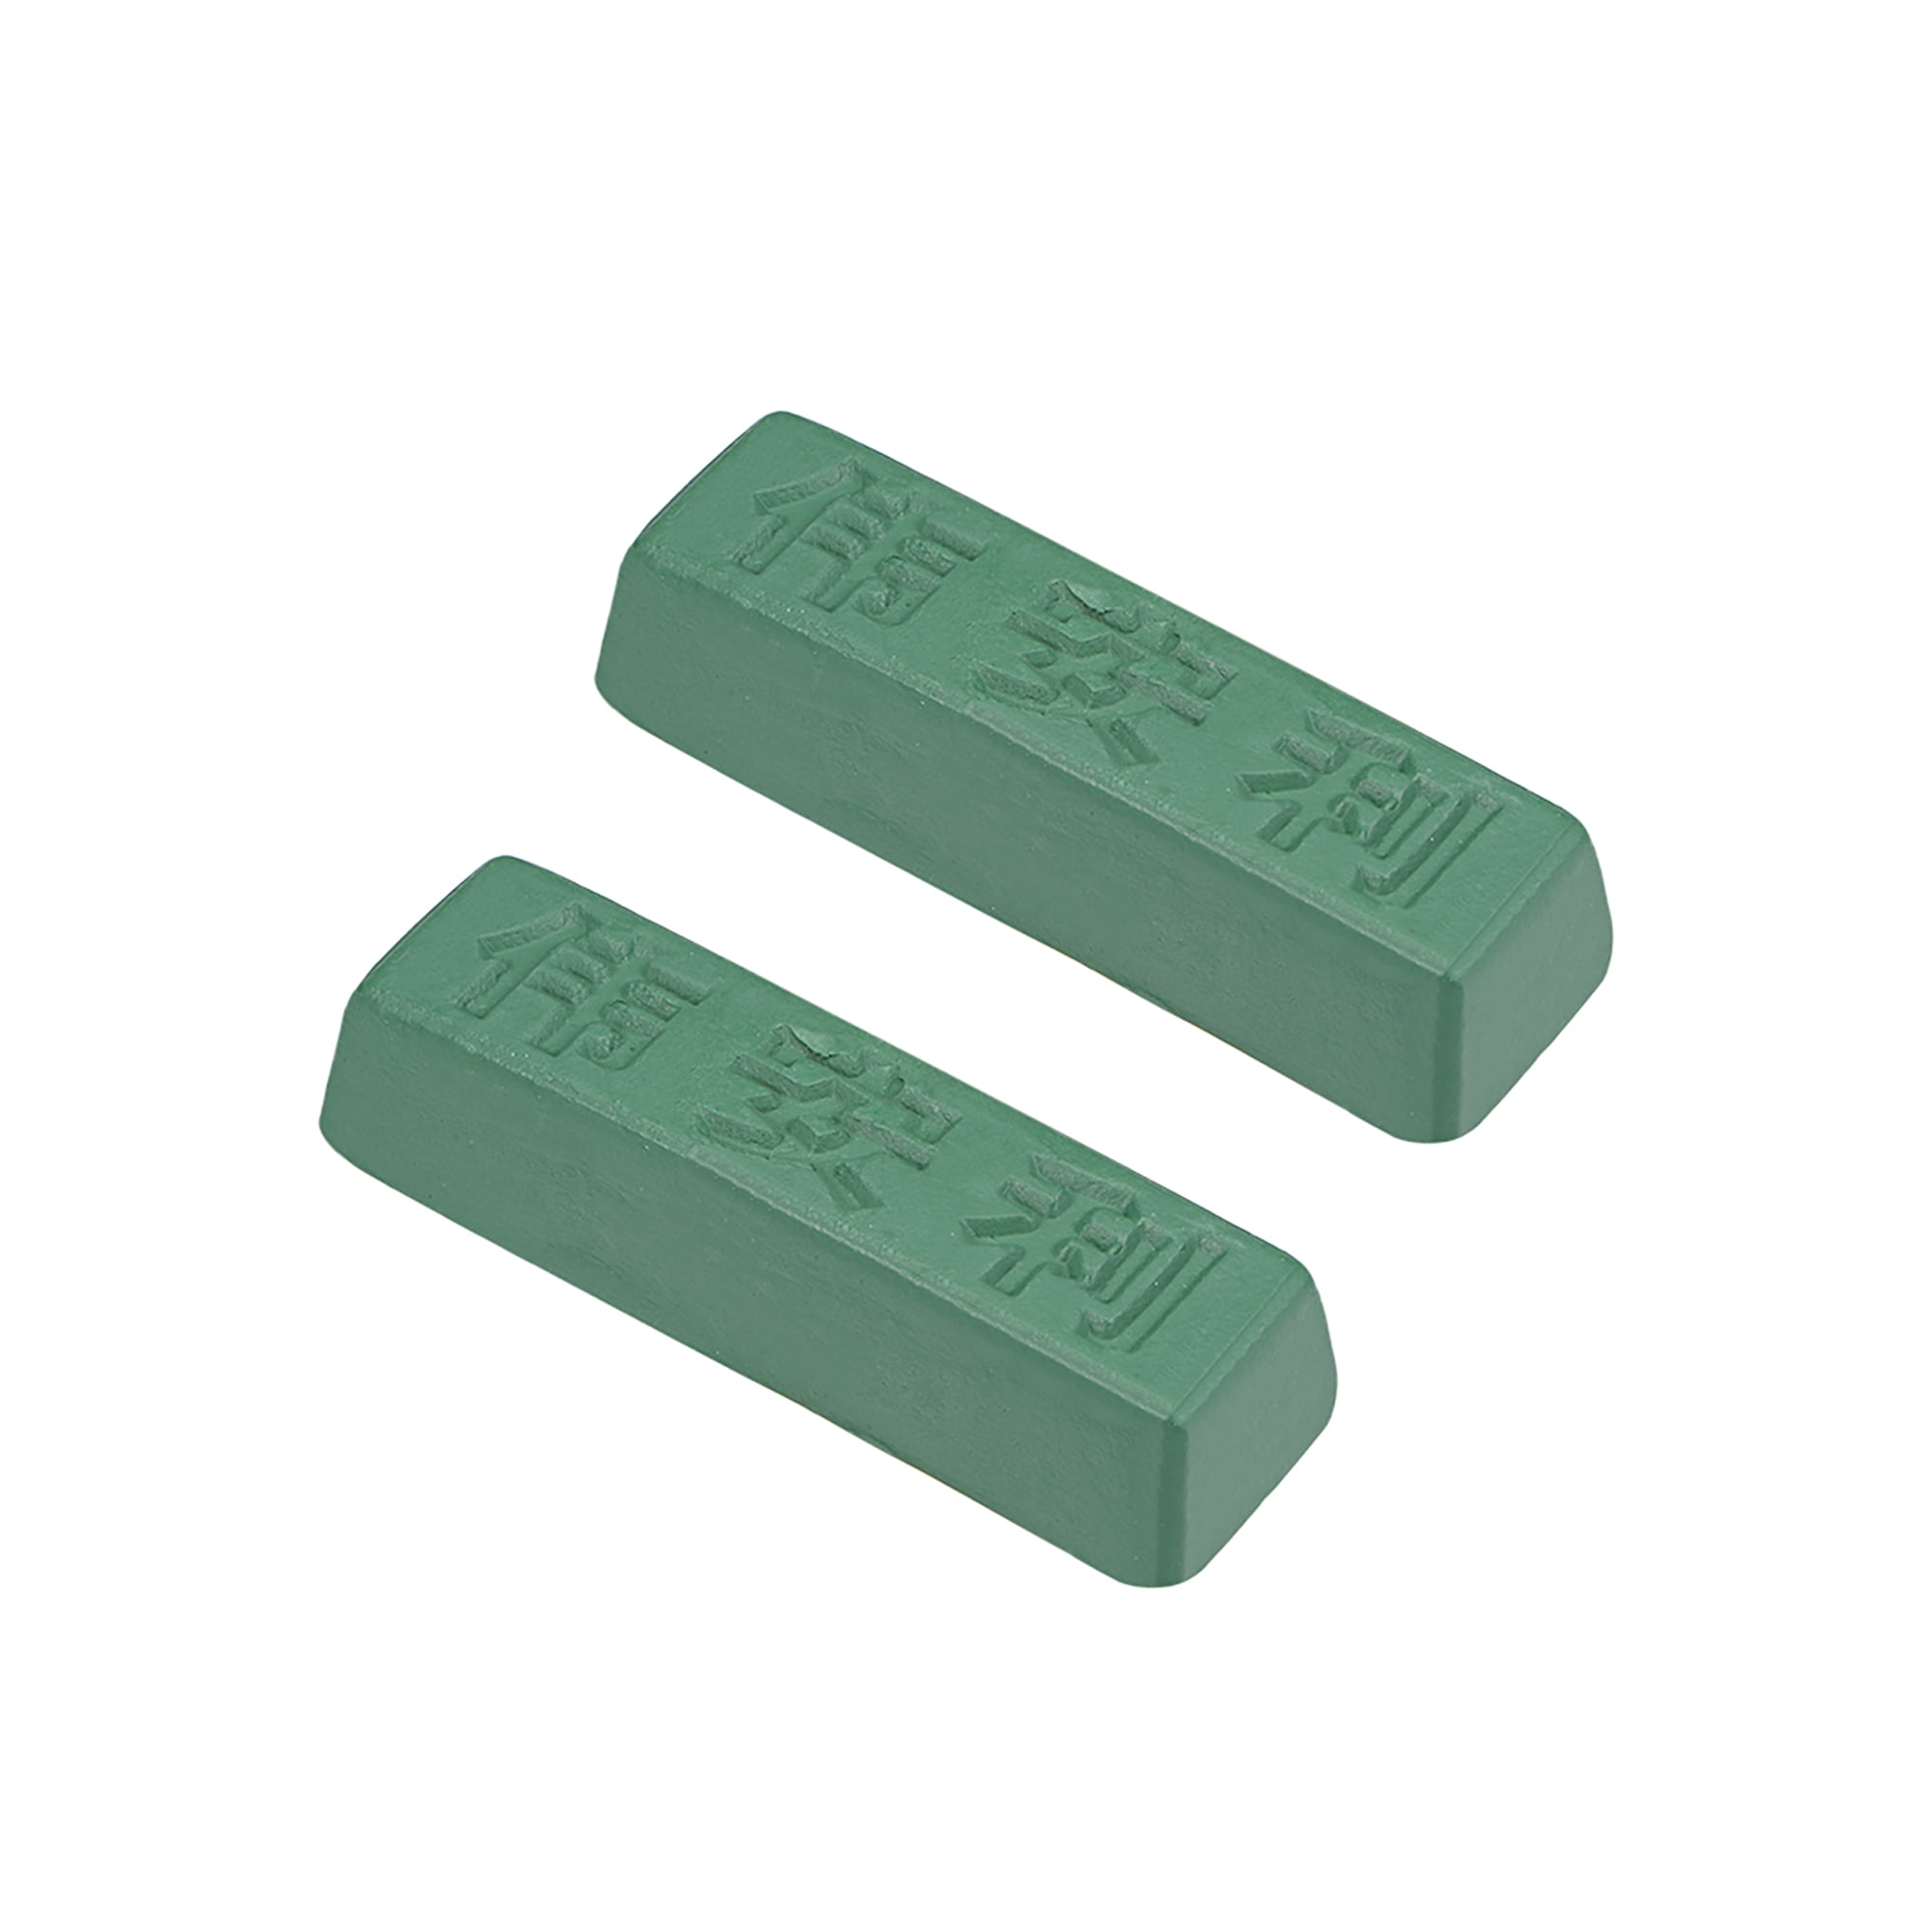 polishing compound kits Green polishing sharpening for metal 110x35x28mm 2 pieces 